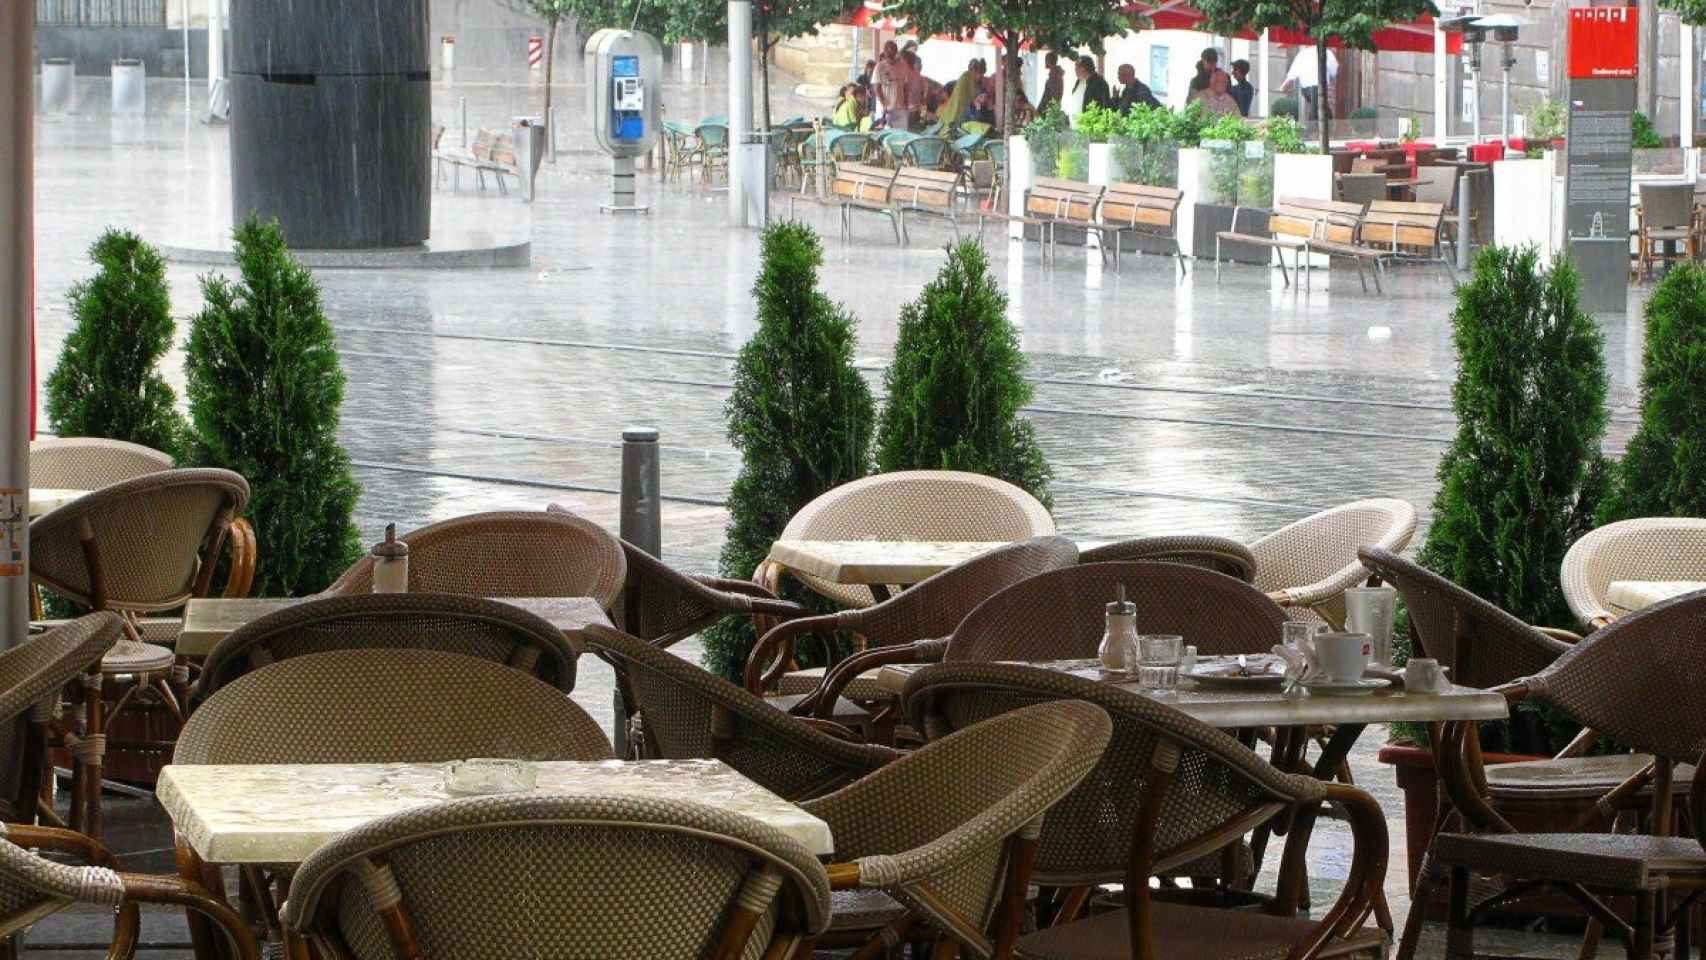 Lluvia en una terraza